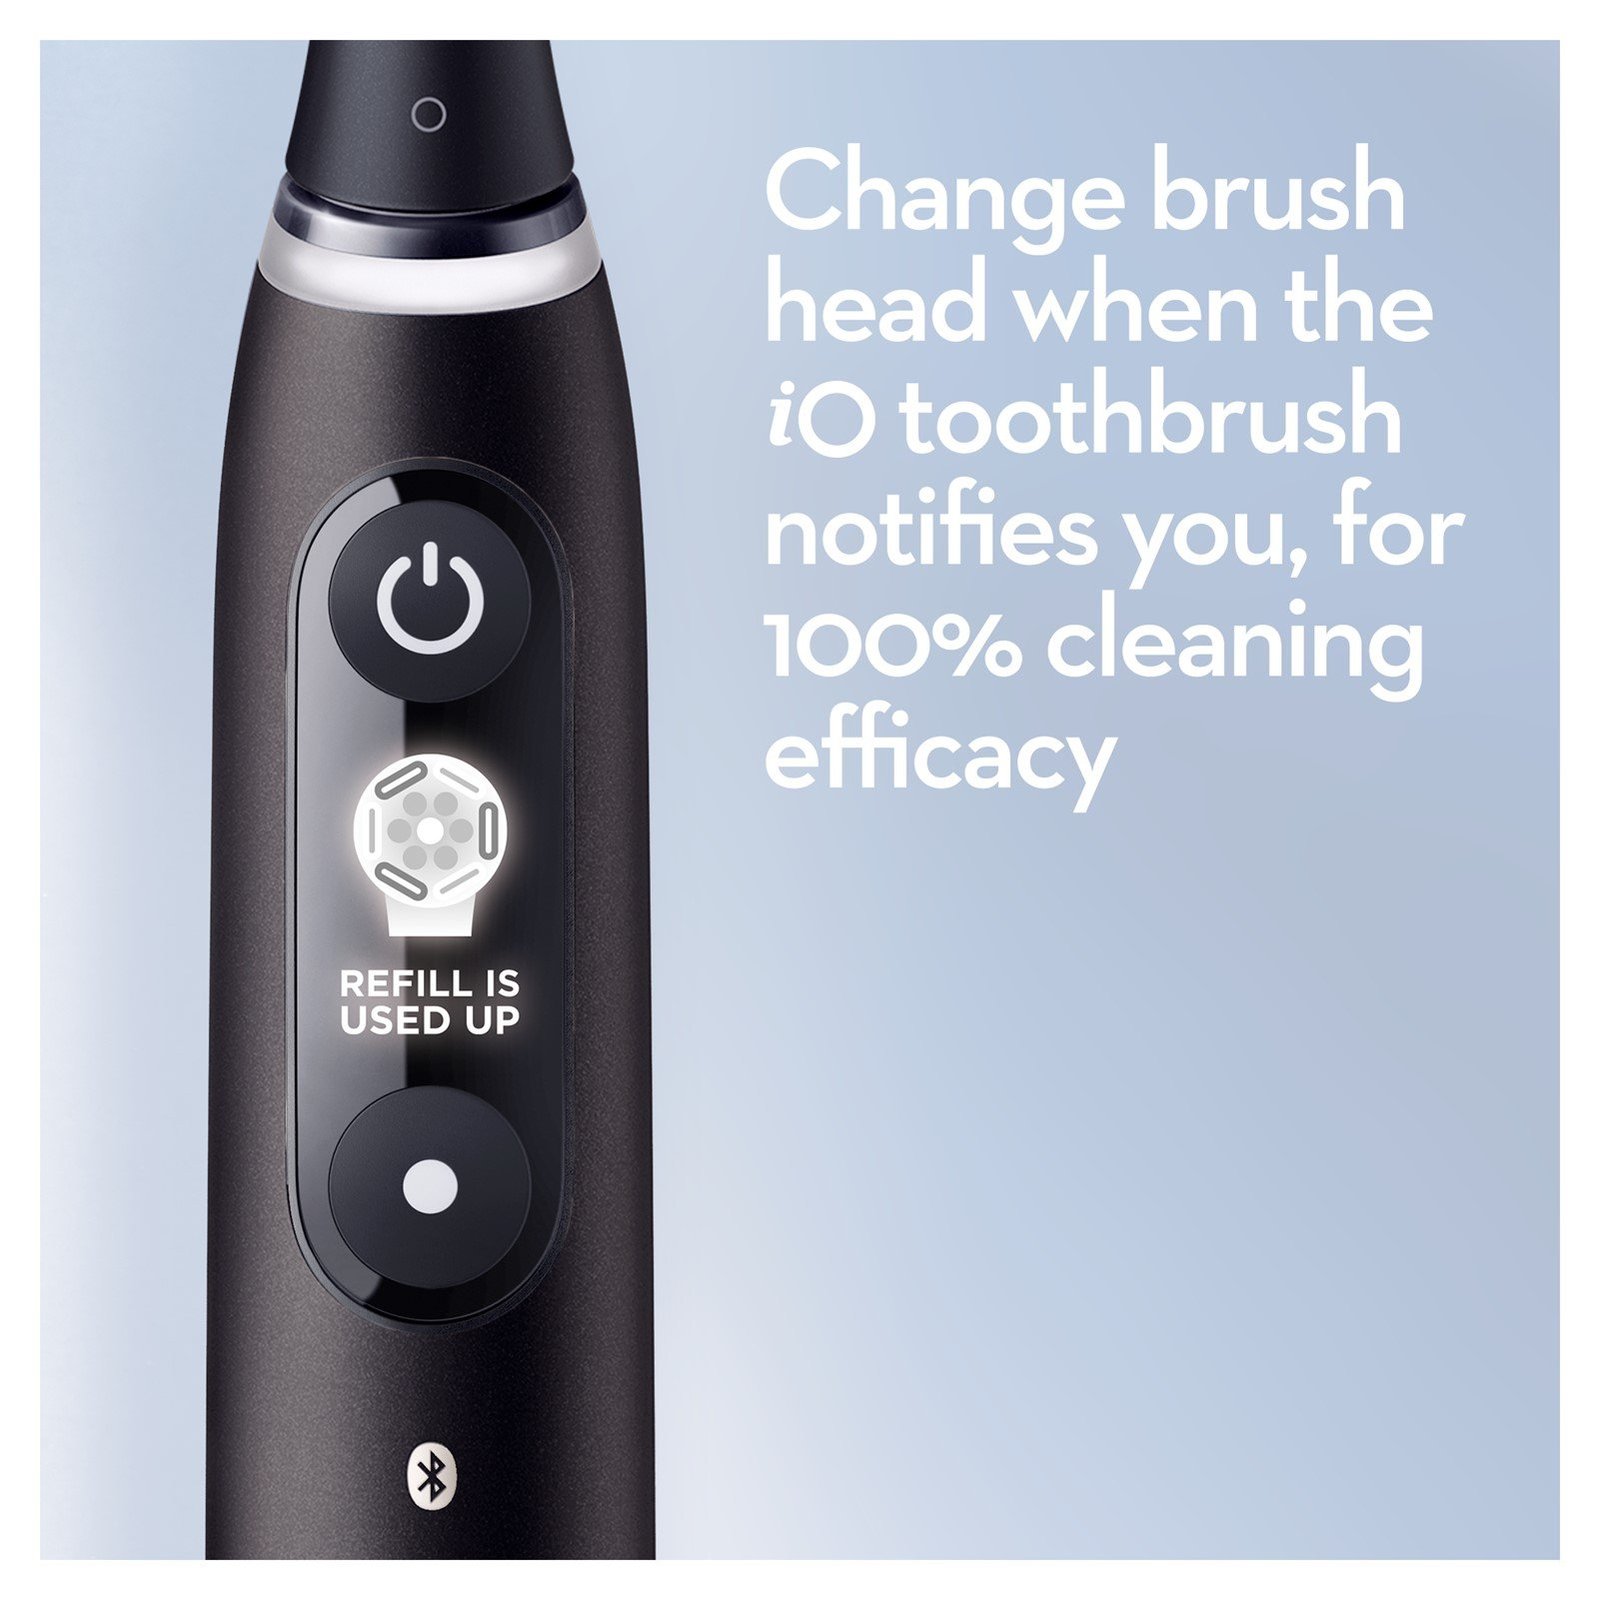 Oral-B iO Series 6 Electric Toothbrush Black